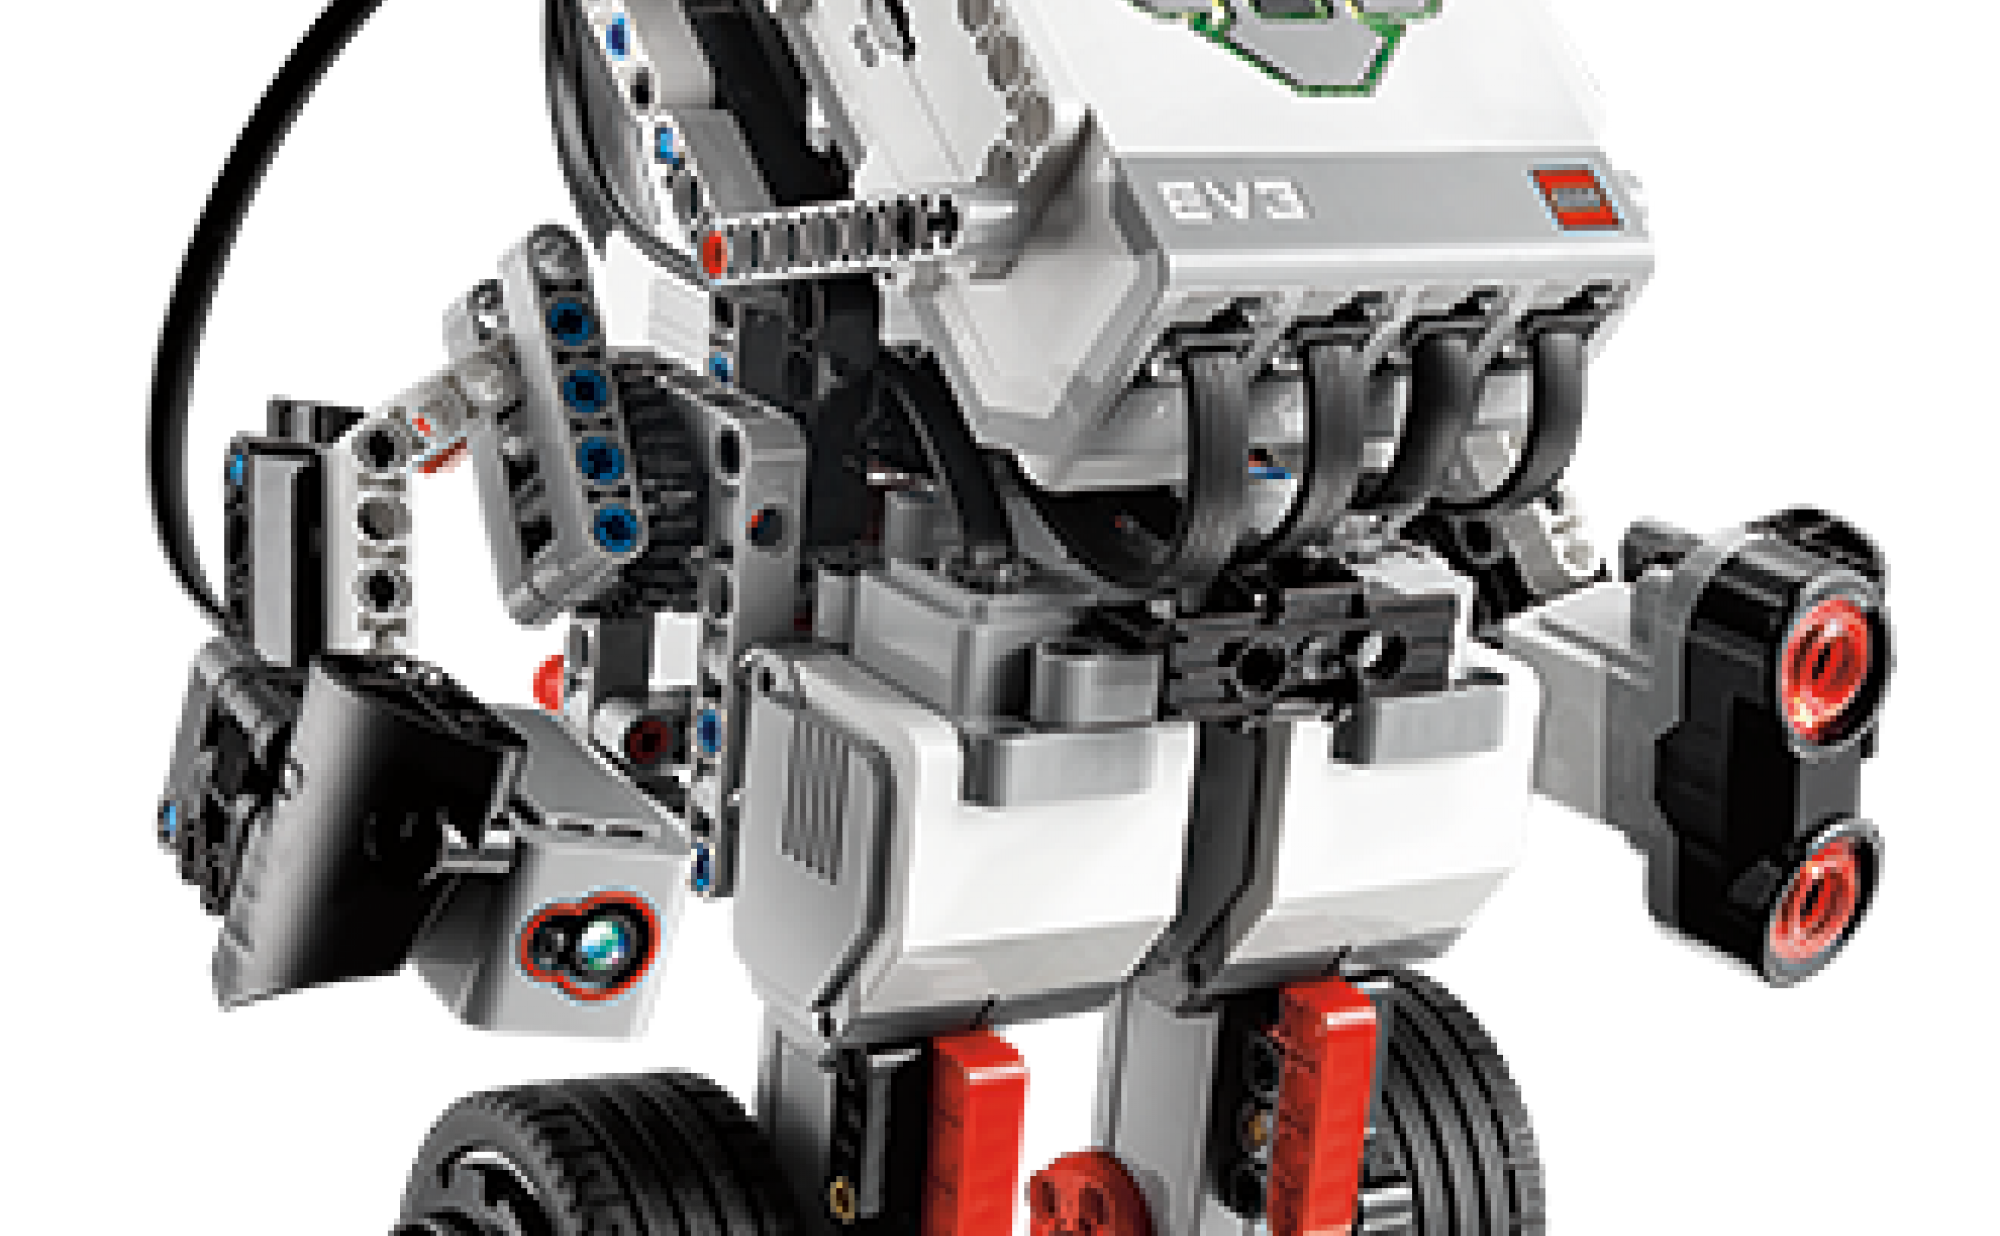 EV3 Lego Robotics stock image